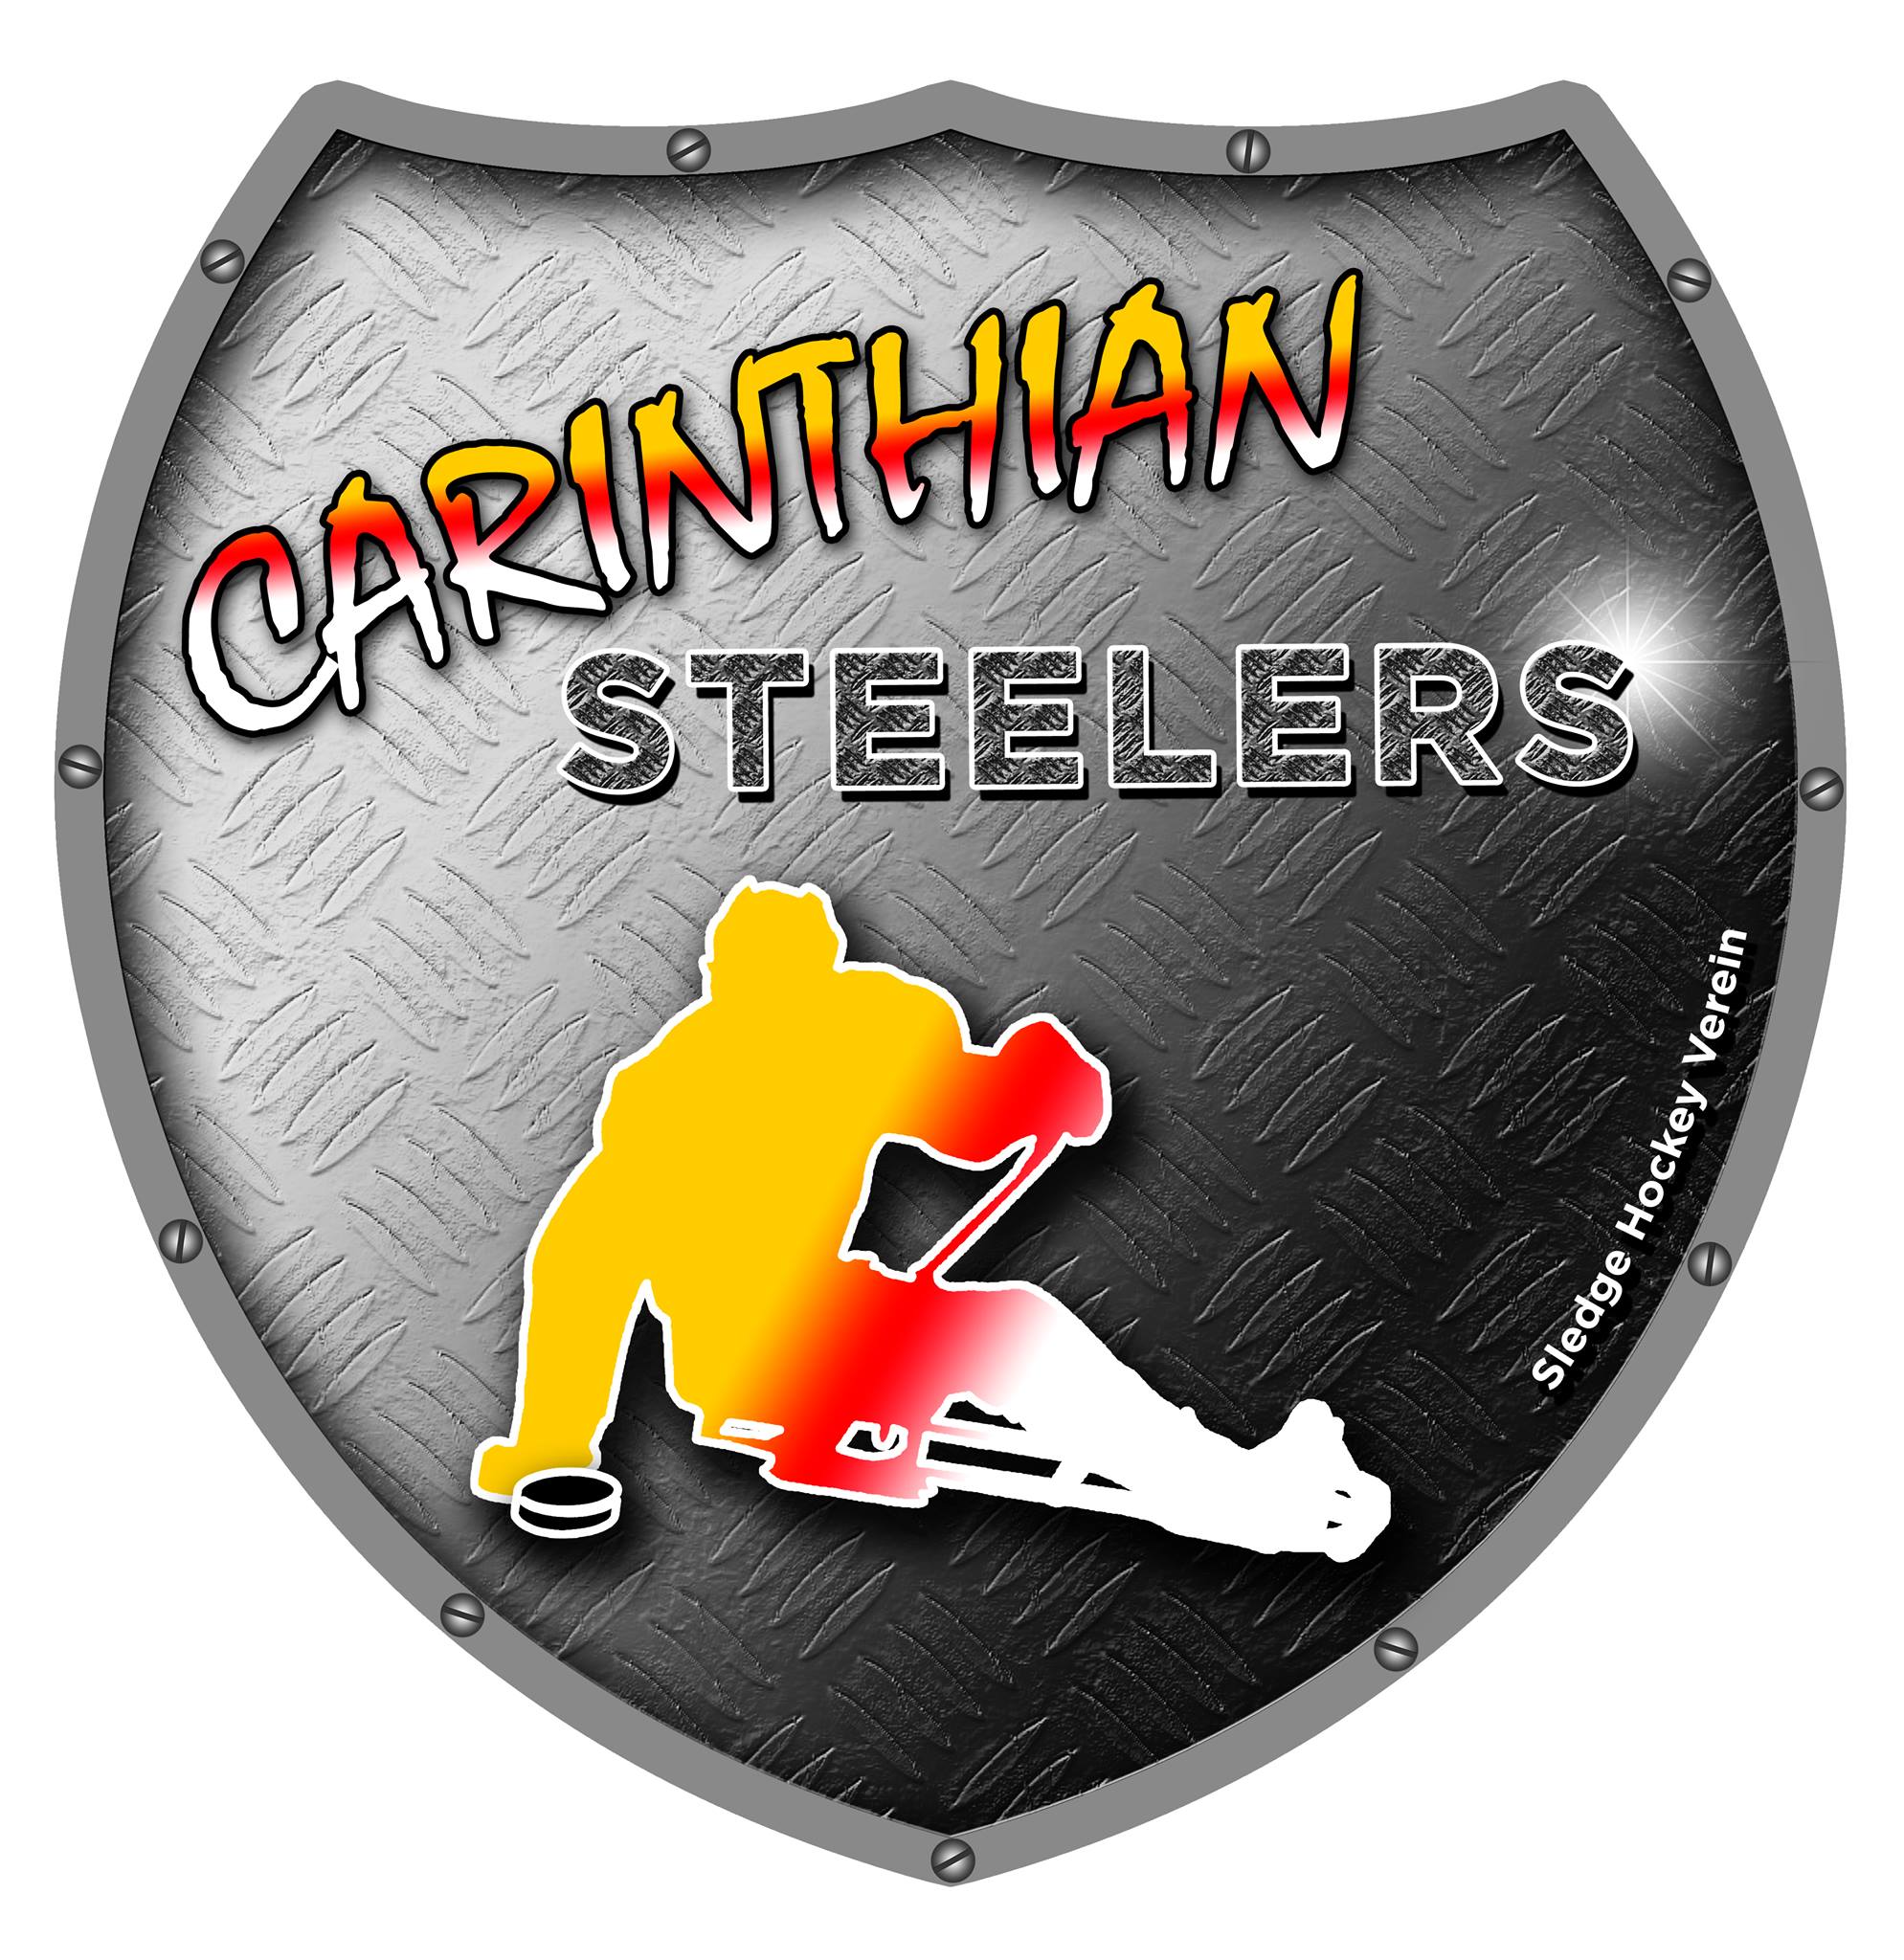 Carinthian Steelers Klagenfurt